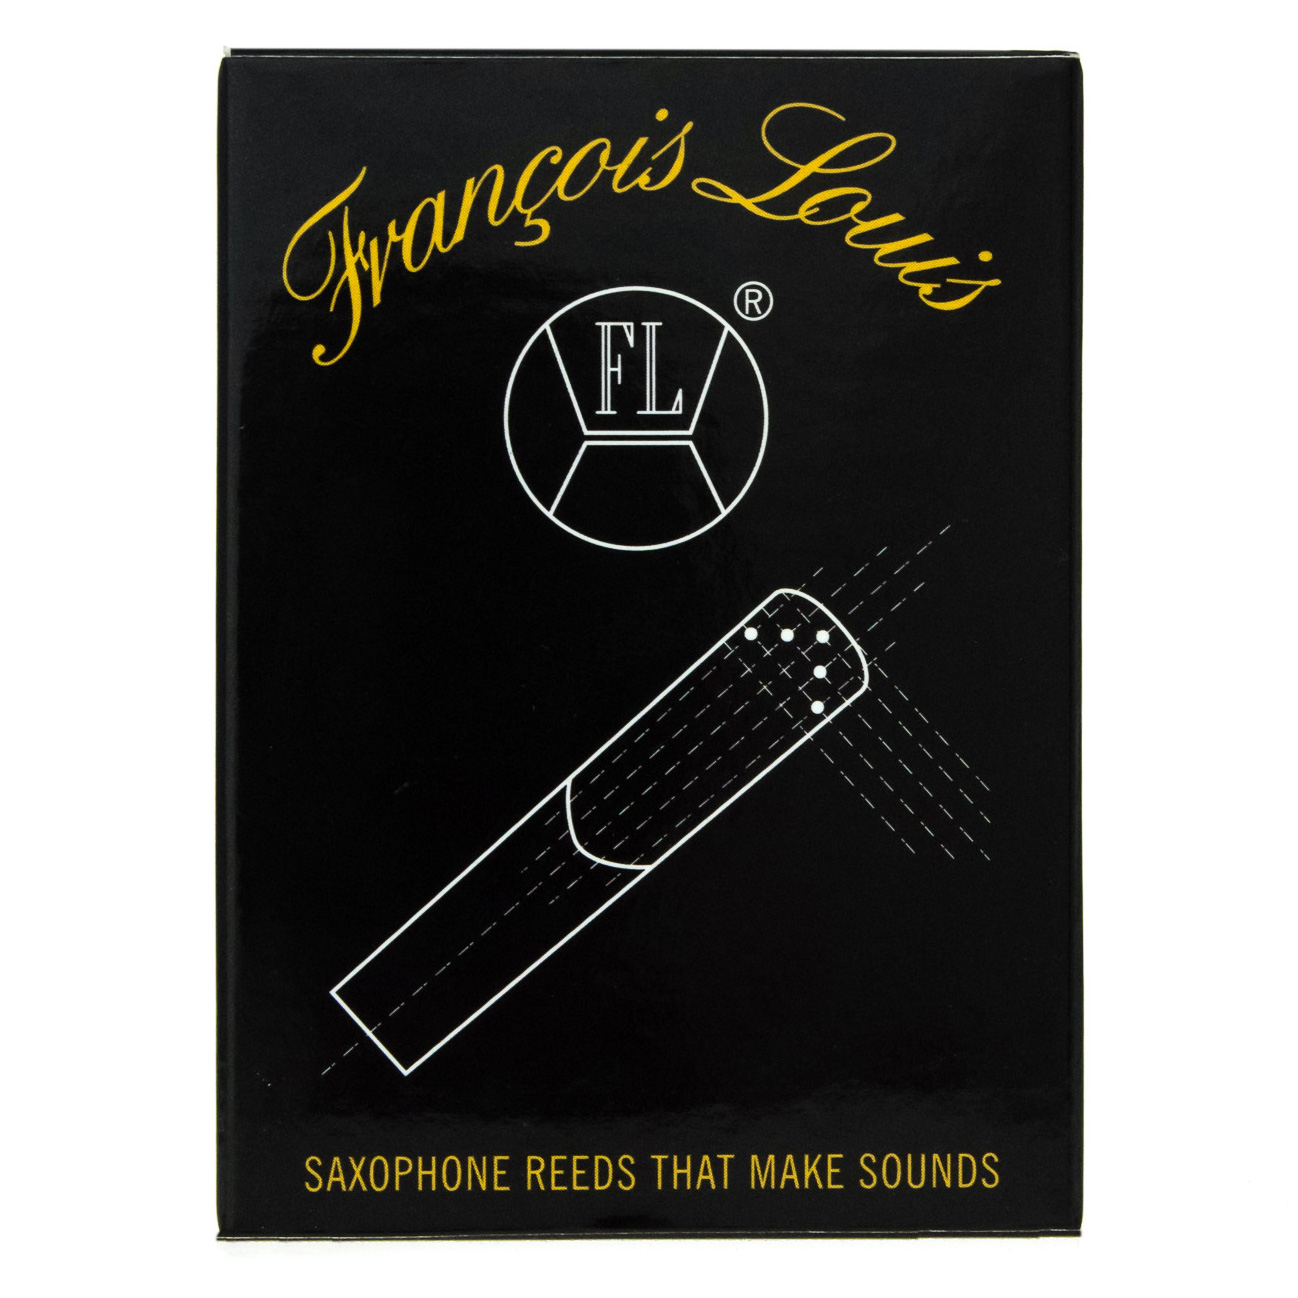 François Louis Reeds - Soprano Sax - Excellence (10 reeds)